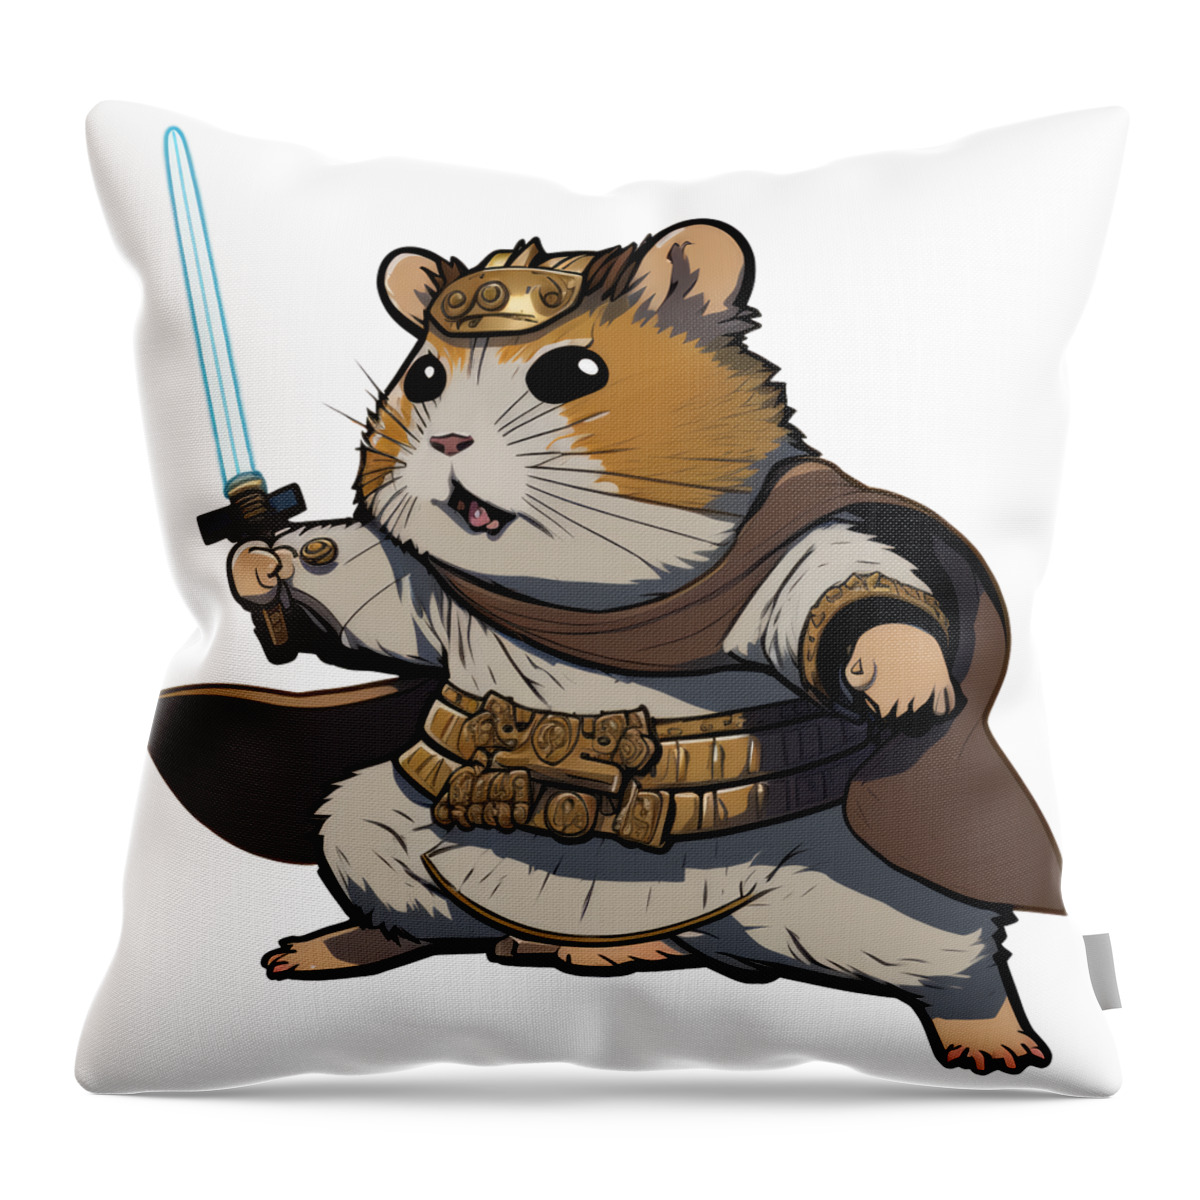 Samurai Throw Pillow featuring the digital art Samurai Hamster - The Furry Fighter of the East by John Twynam